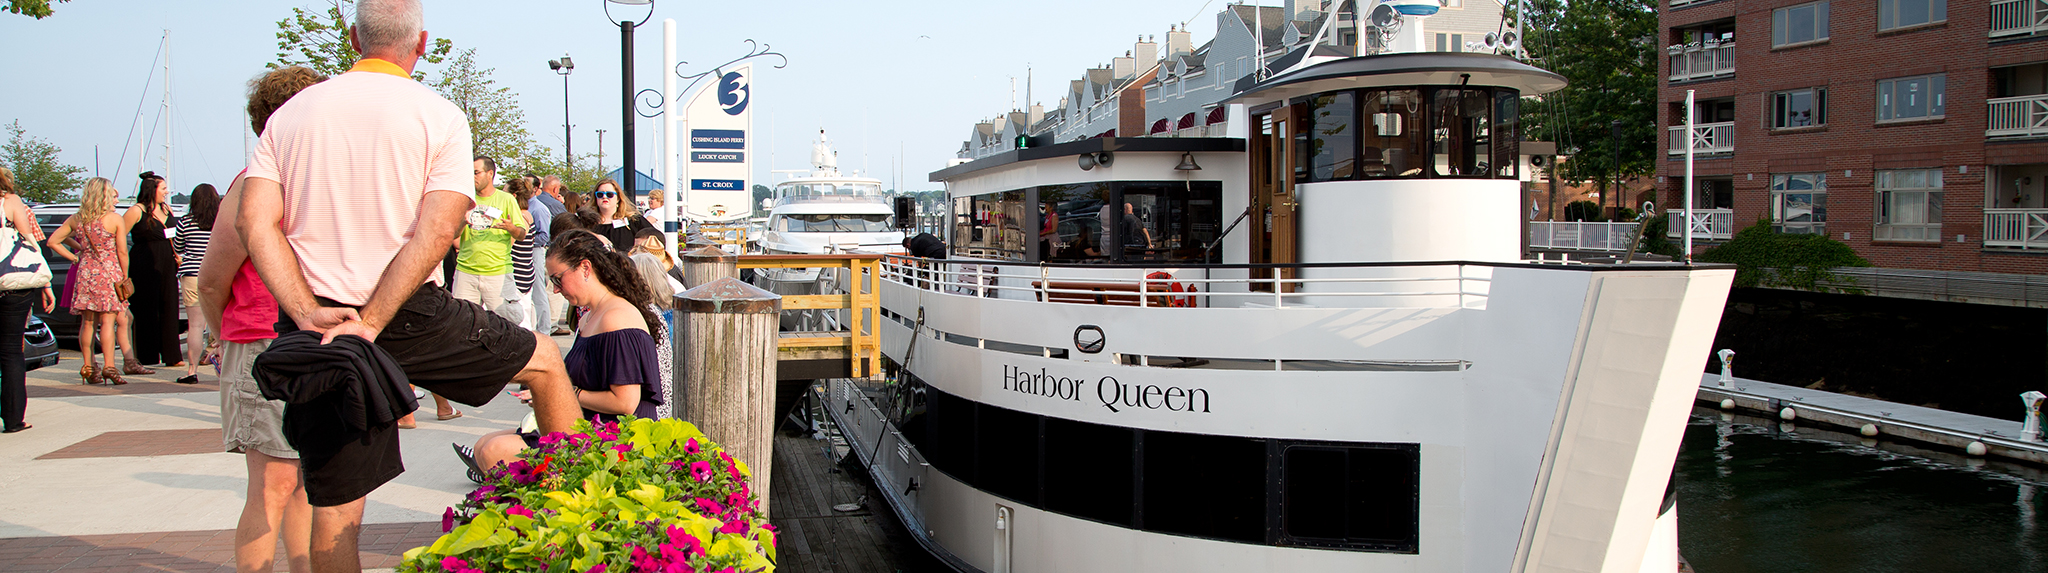 Harbor Queen- take an alumni cruise